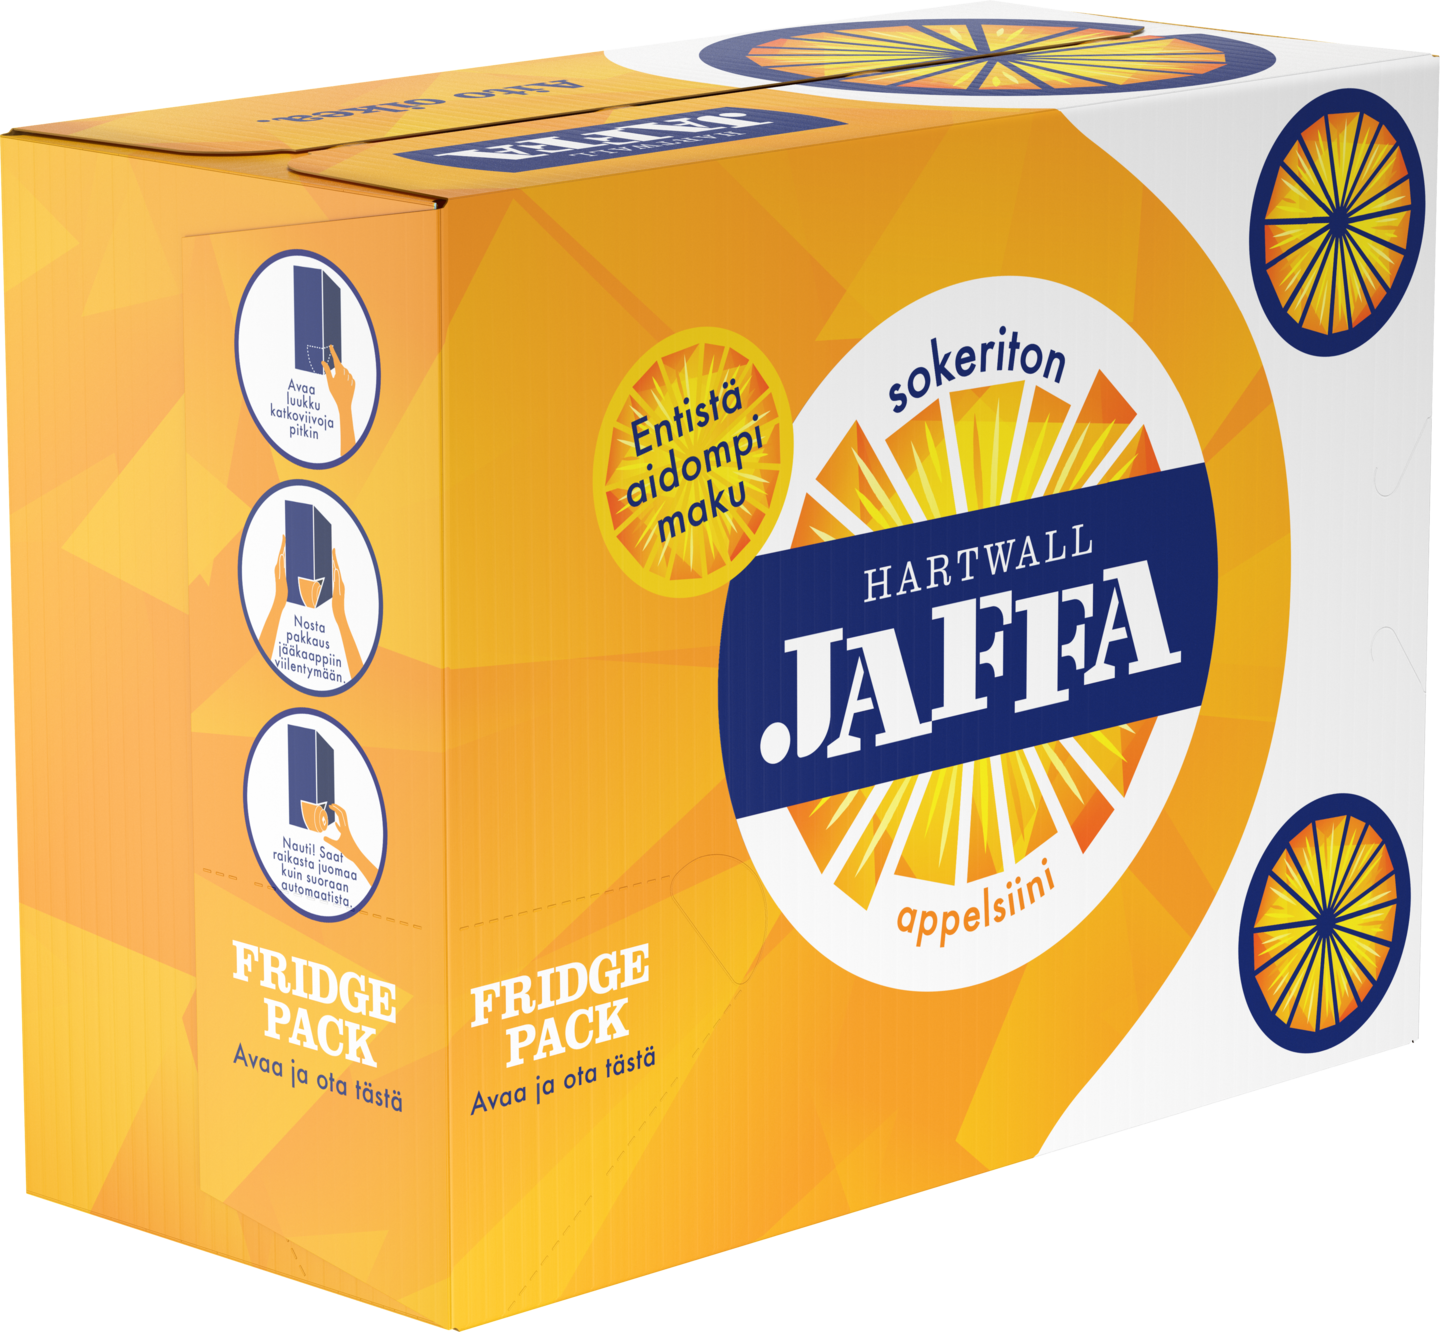 Hartwall Jaffa Appelsiini sokeriton virvoitusjuoma 0,33l 12-pack